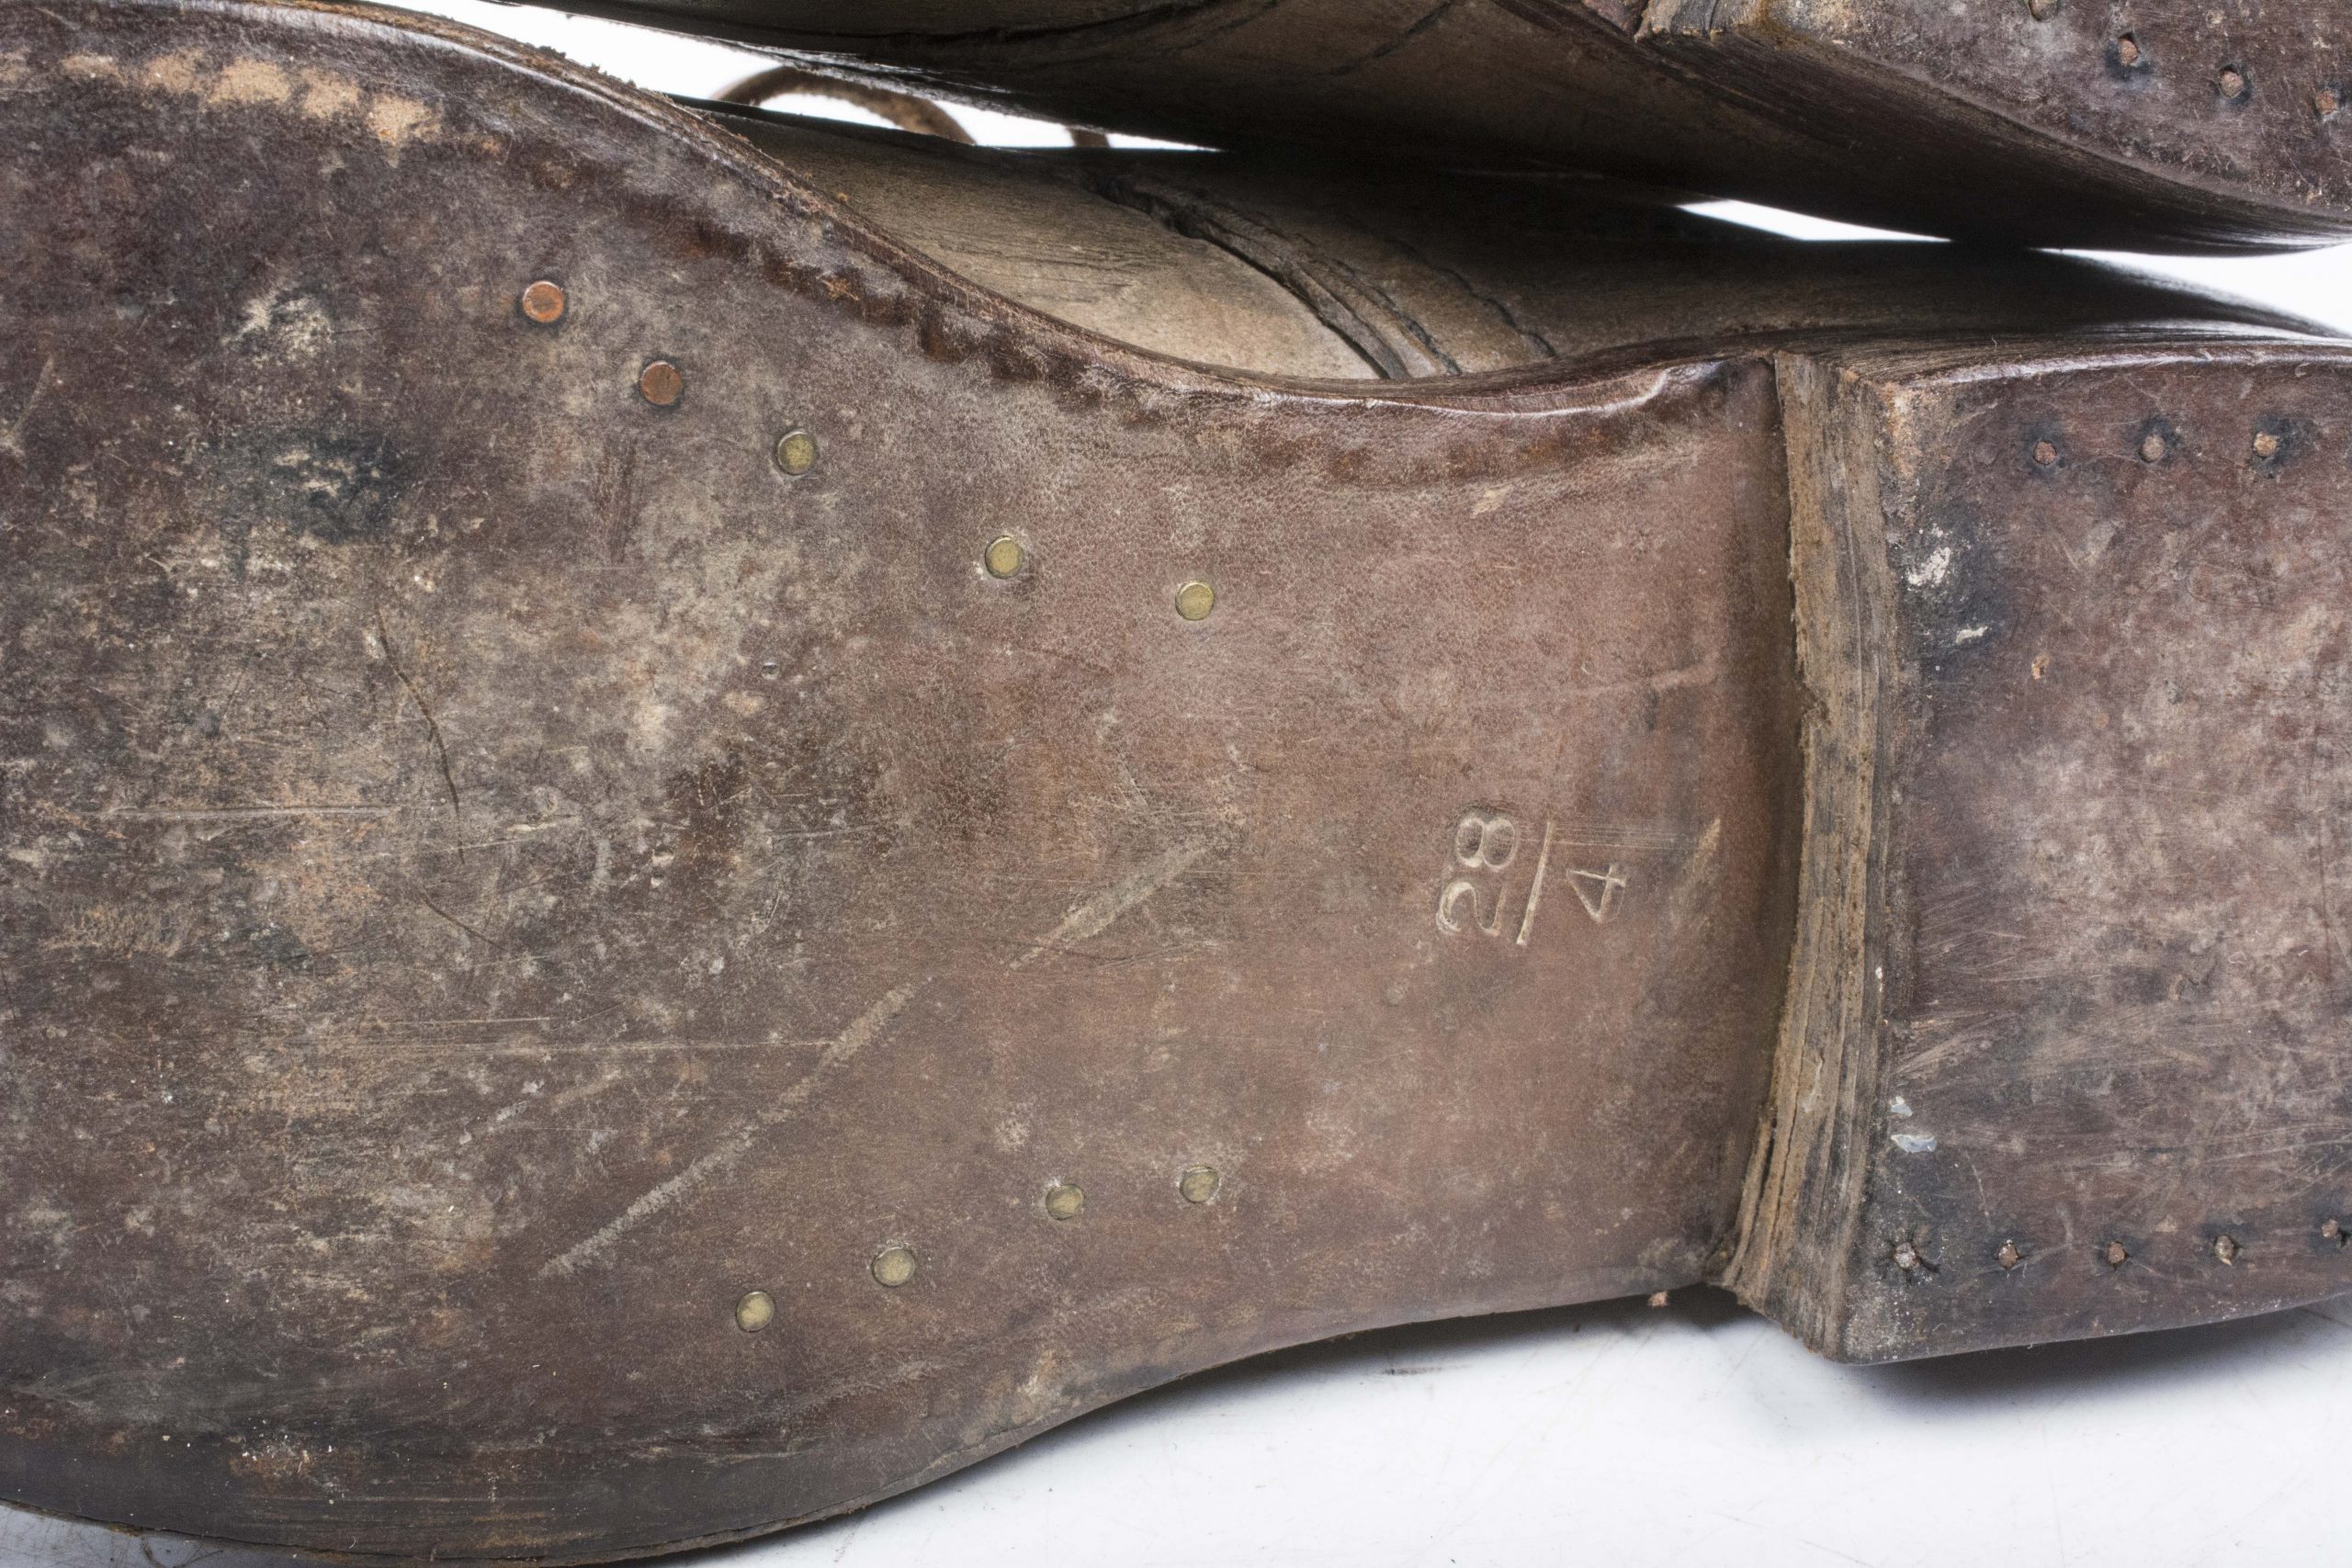 Late war Italian boots – fjm44